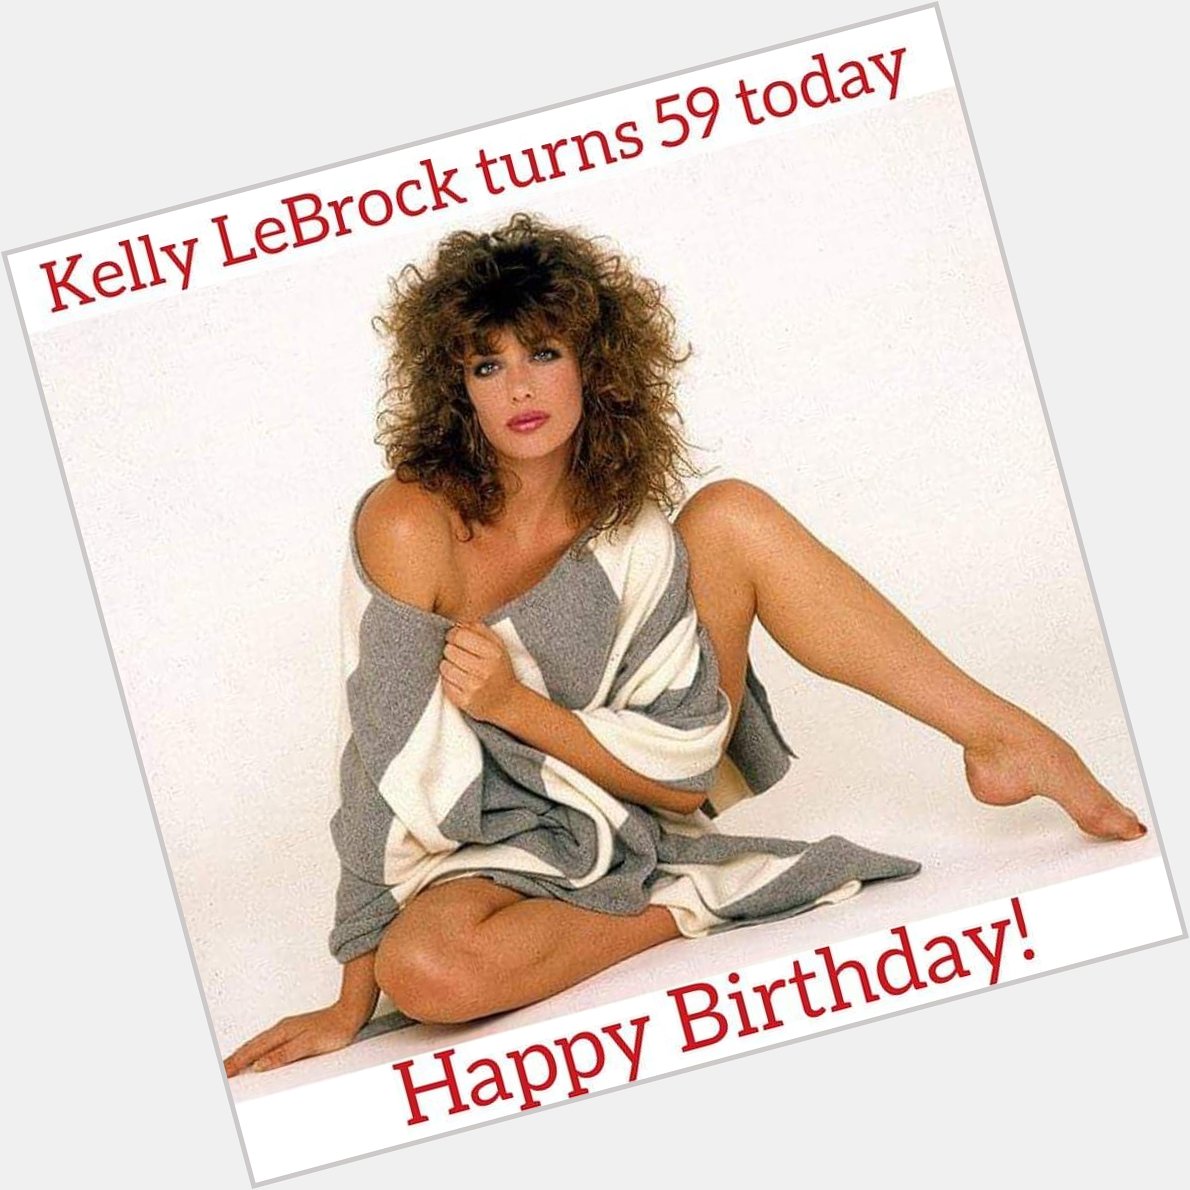 Happy Birthday Kelly LeBrock! 